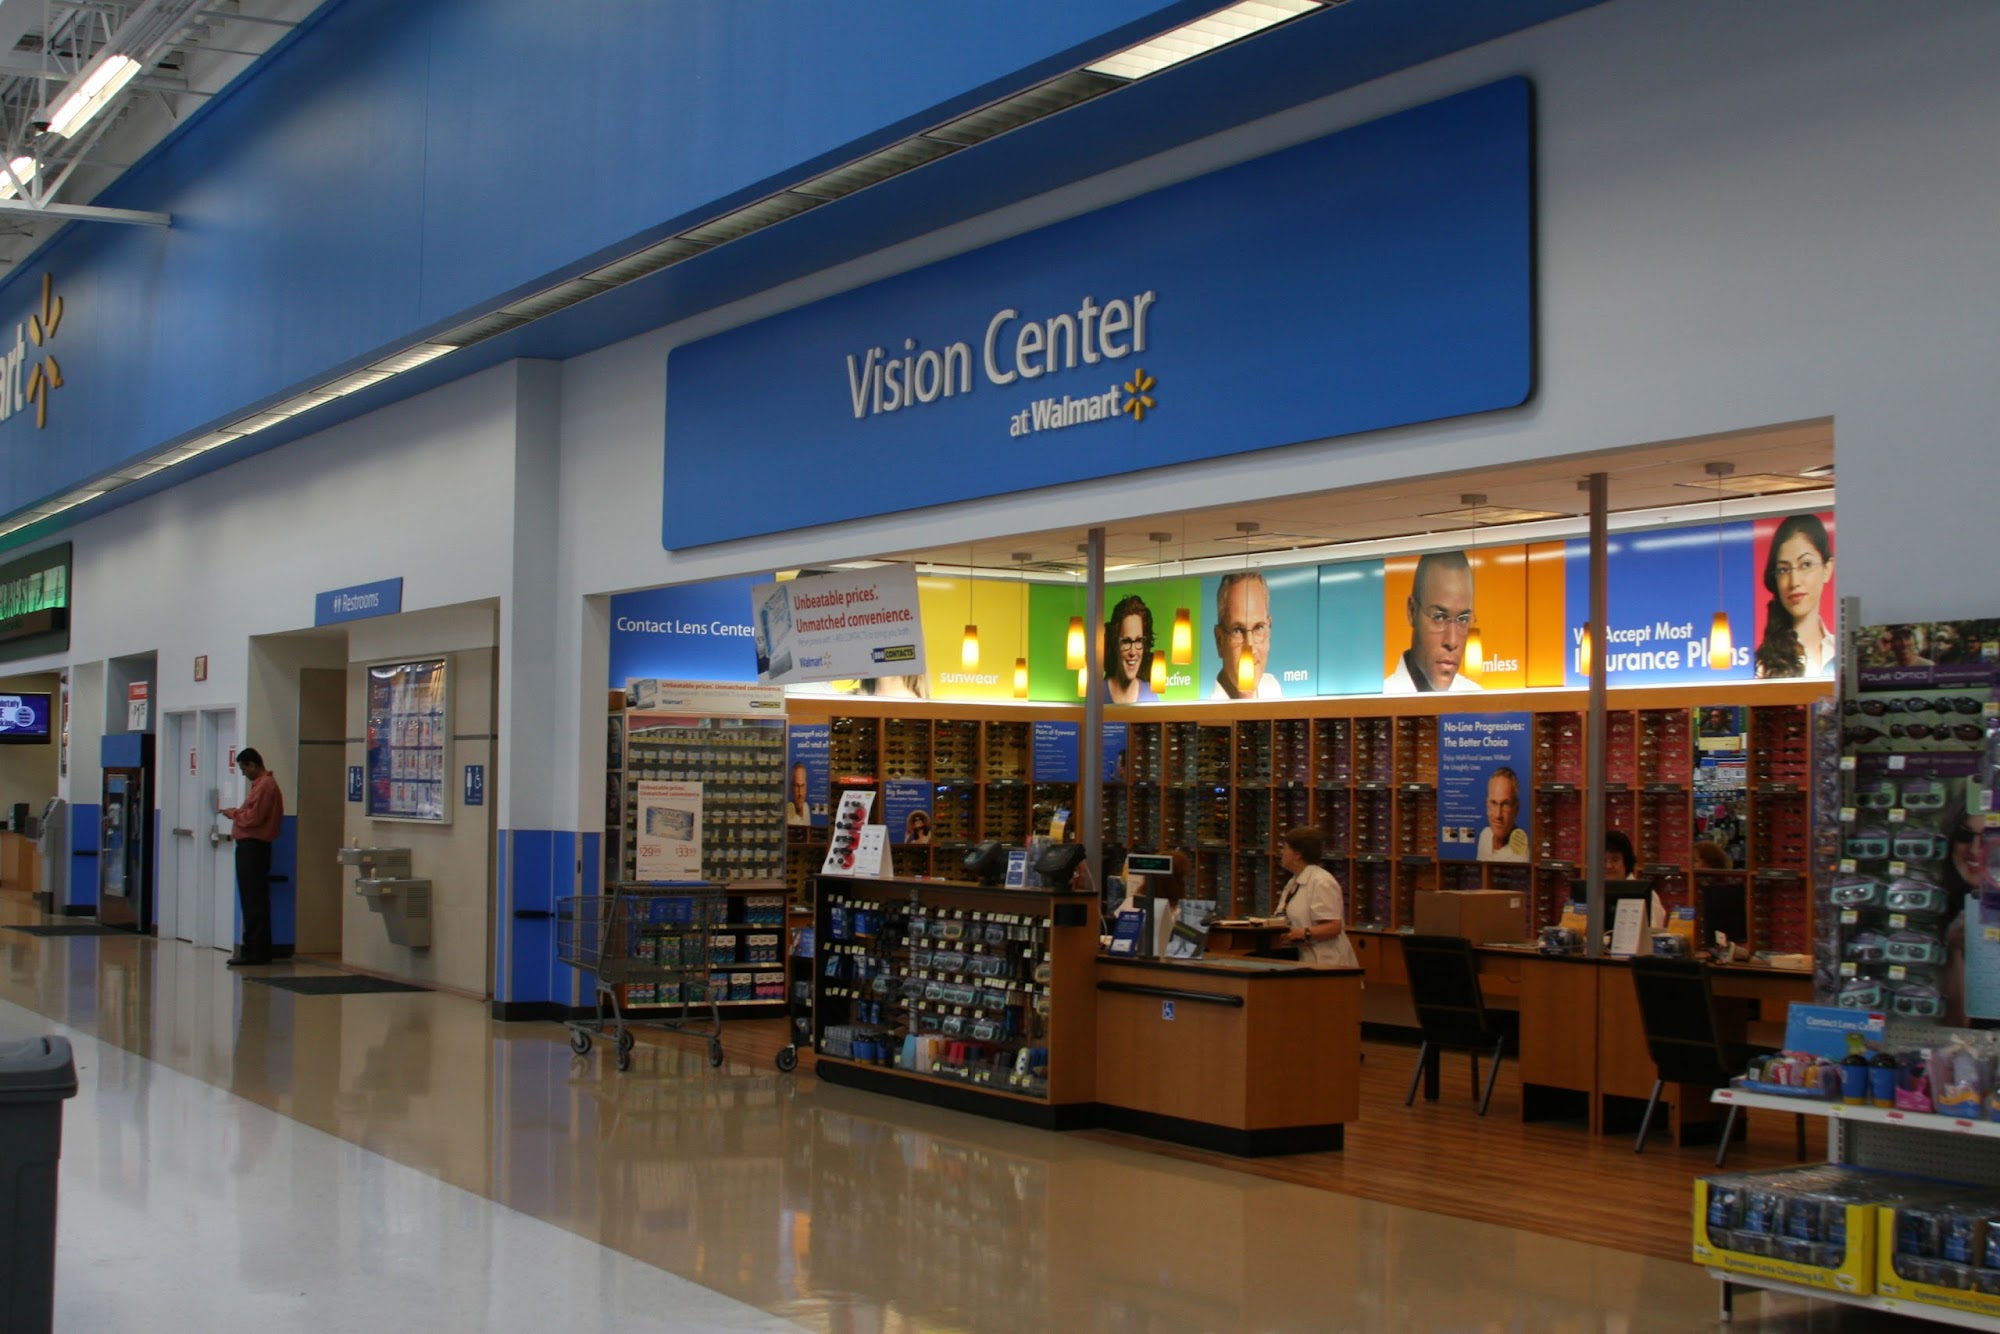 Walmart Vision & Glasses 9265 159th St, Orland Hills Illinois 60487